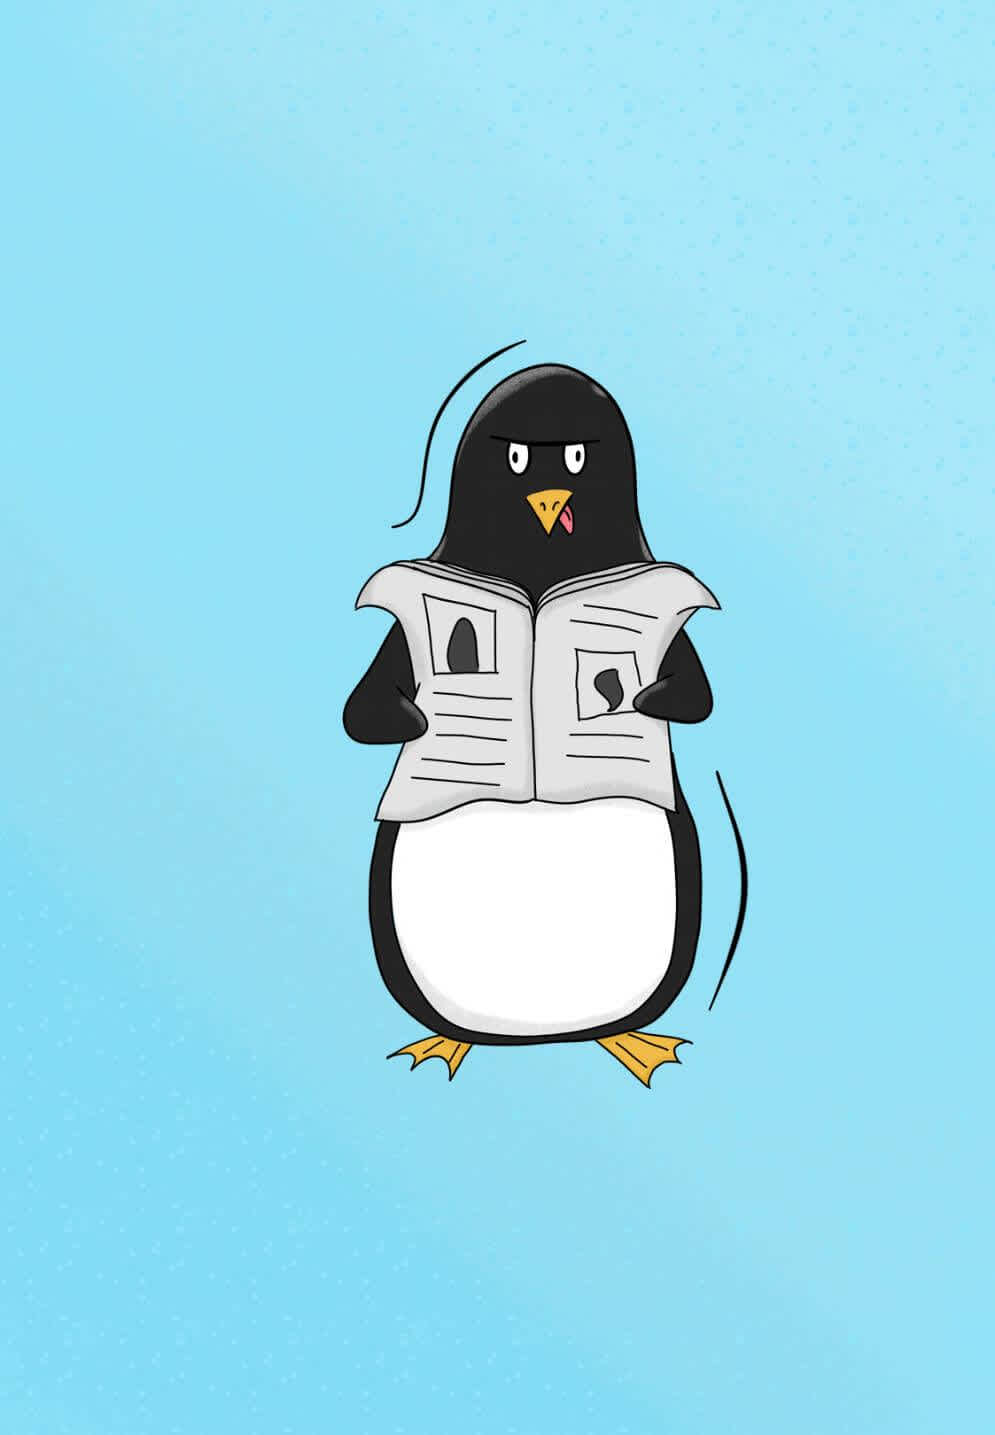 Penguin reading a paper